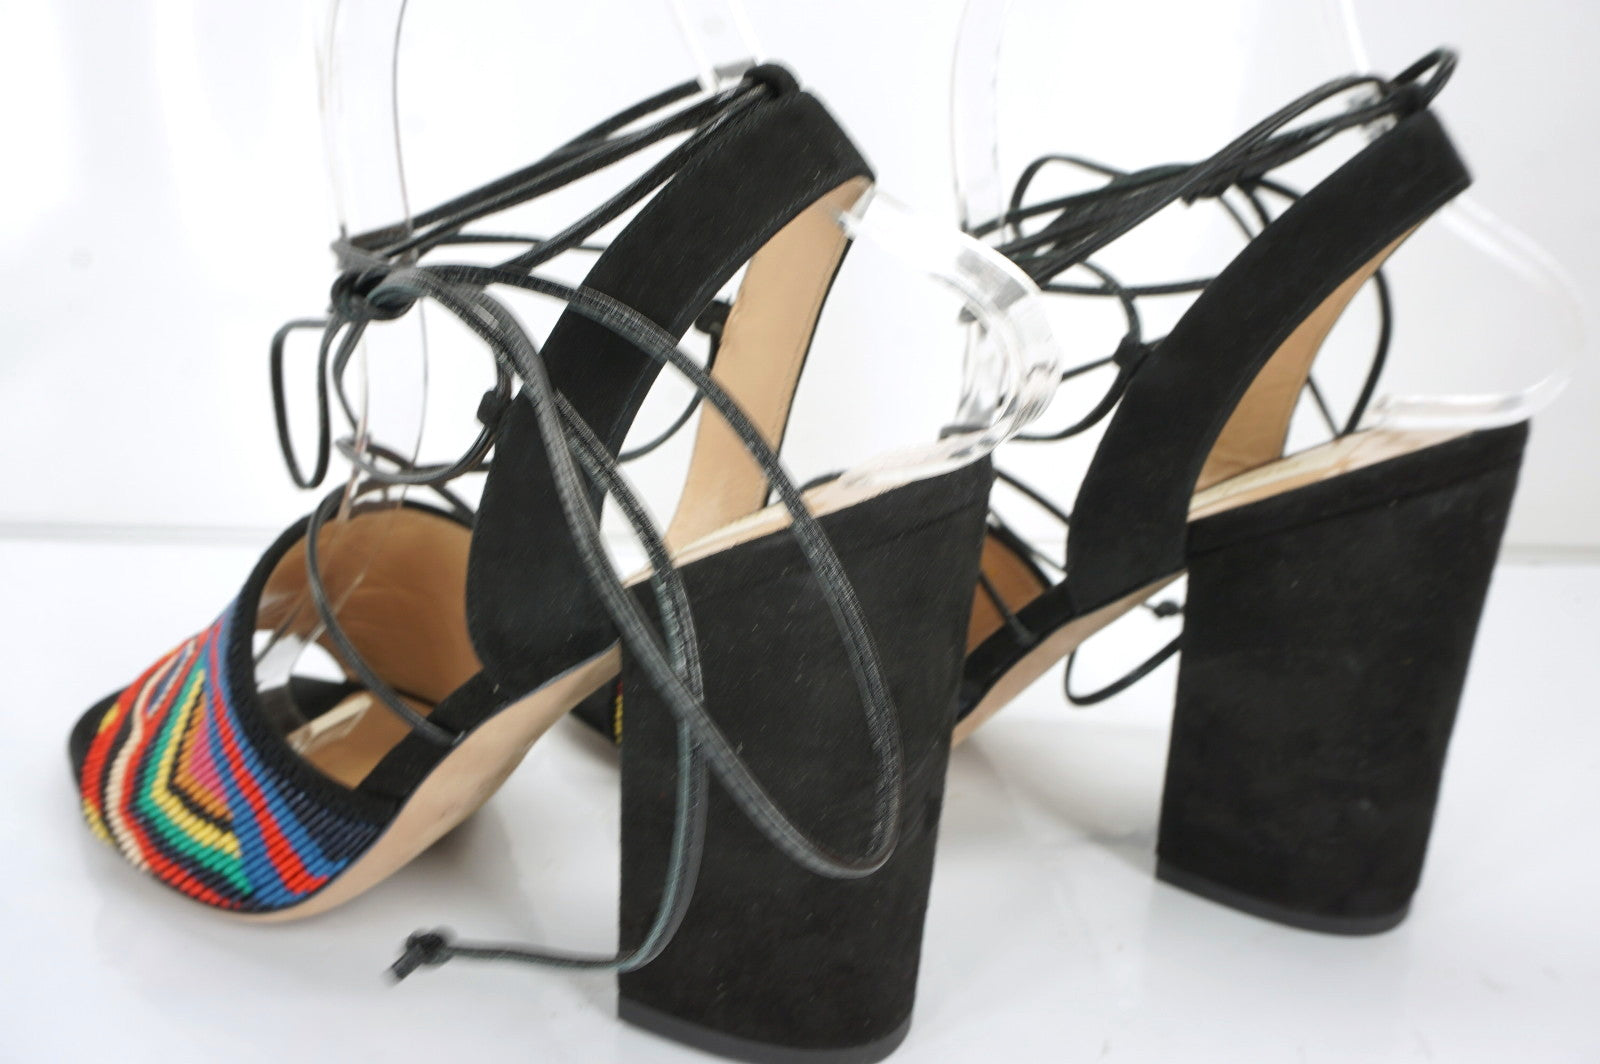 Valentino Native Tibal Beaded Lace-Up Sandals SZ 38 Ankle Strap $1375 NIB